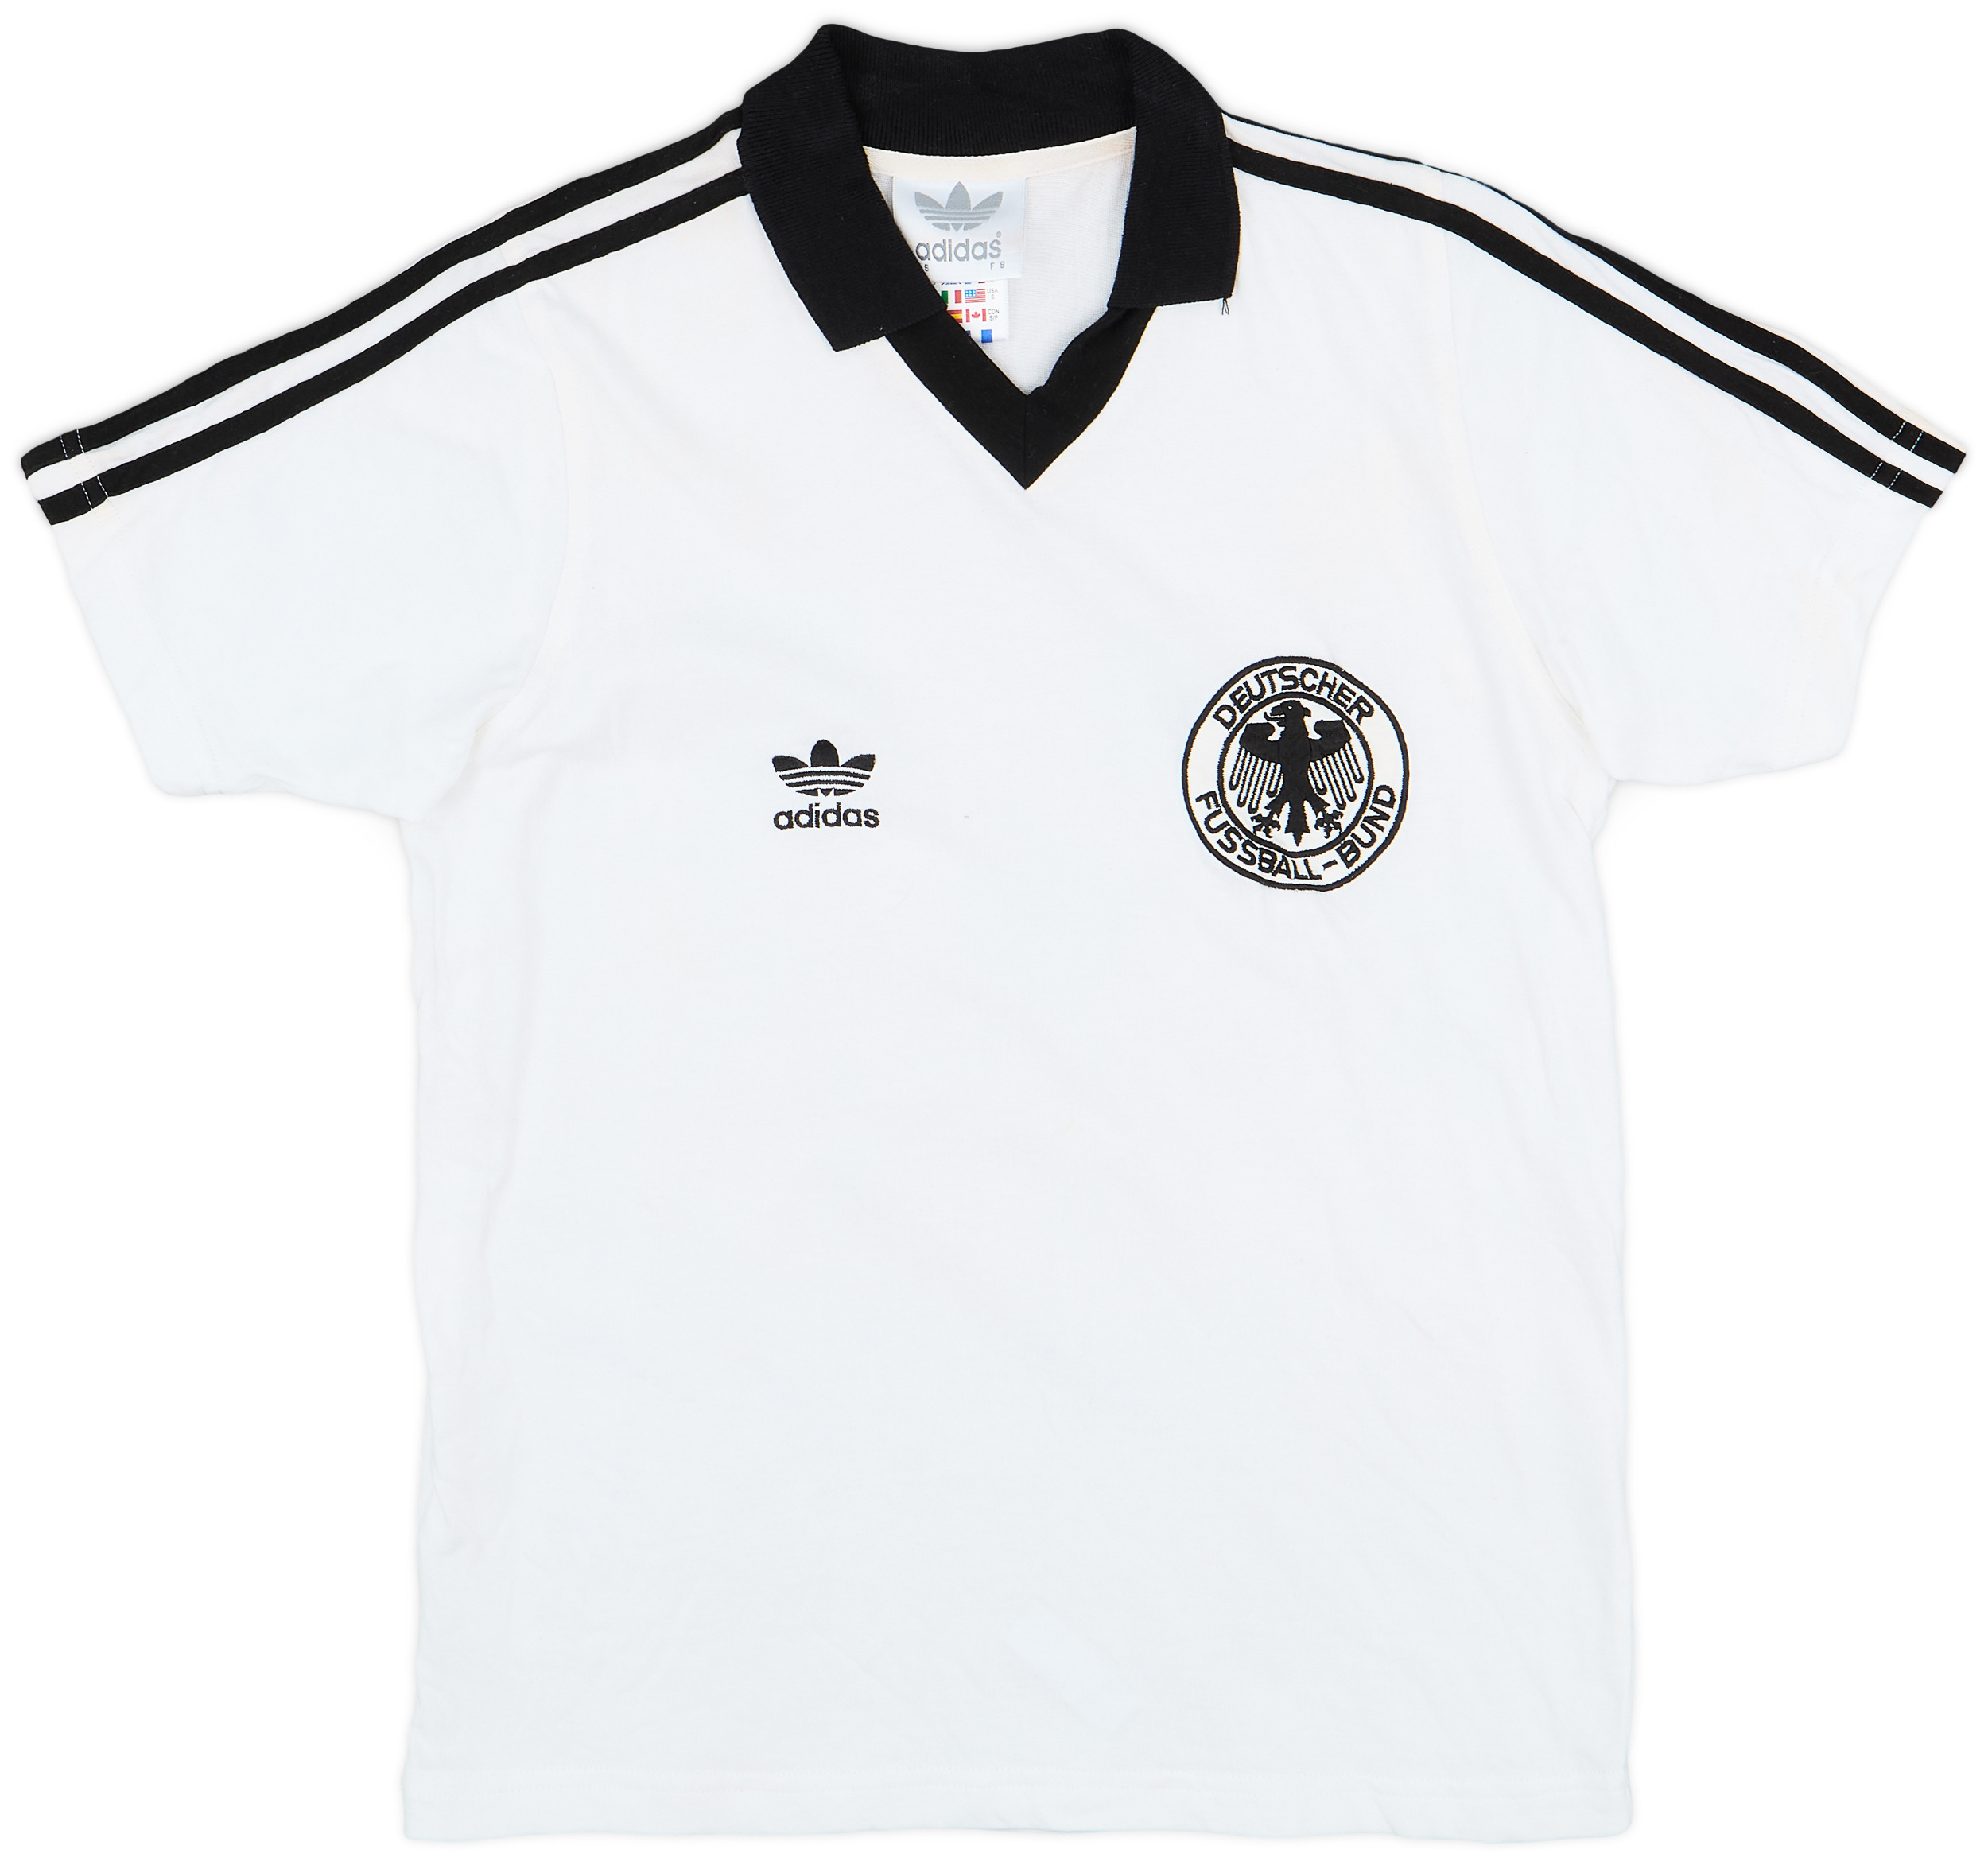 2000-01 Germany adidas 1982 Retro Shirt - 9/10 - ()